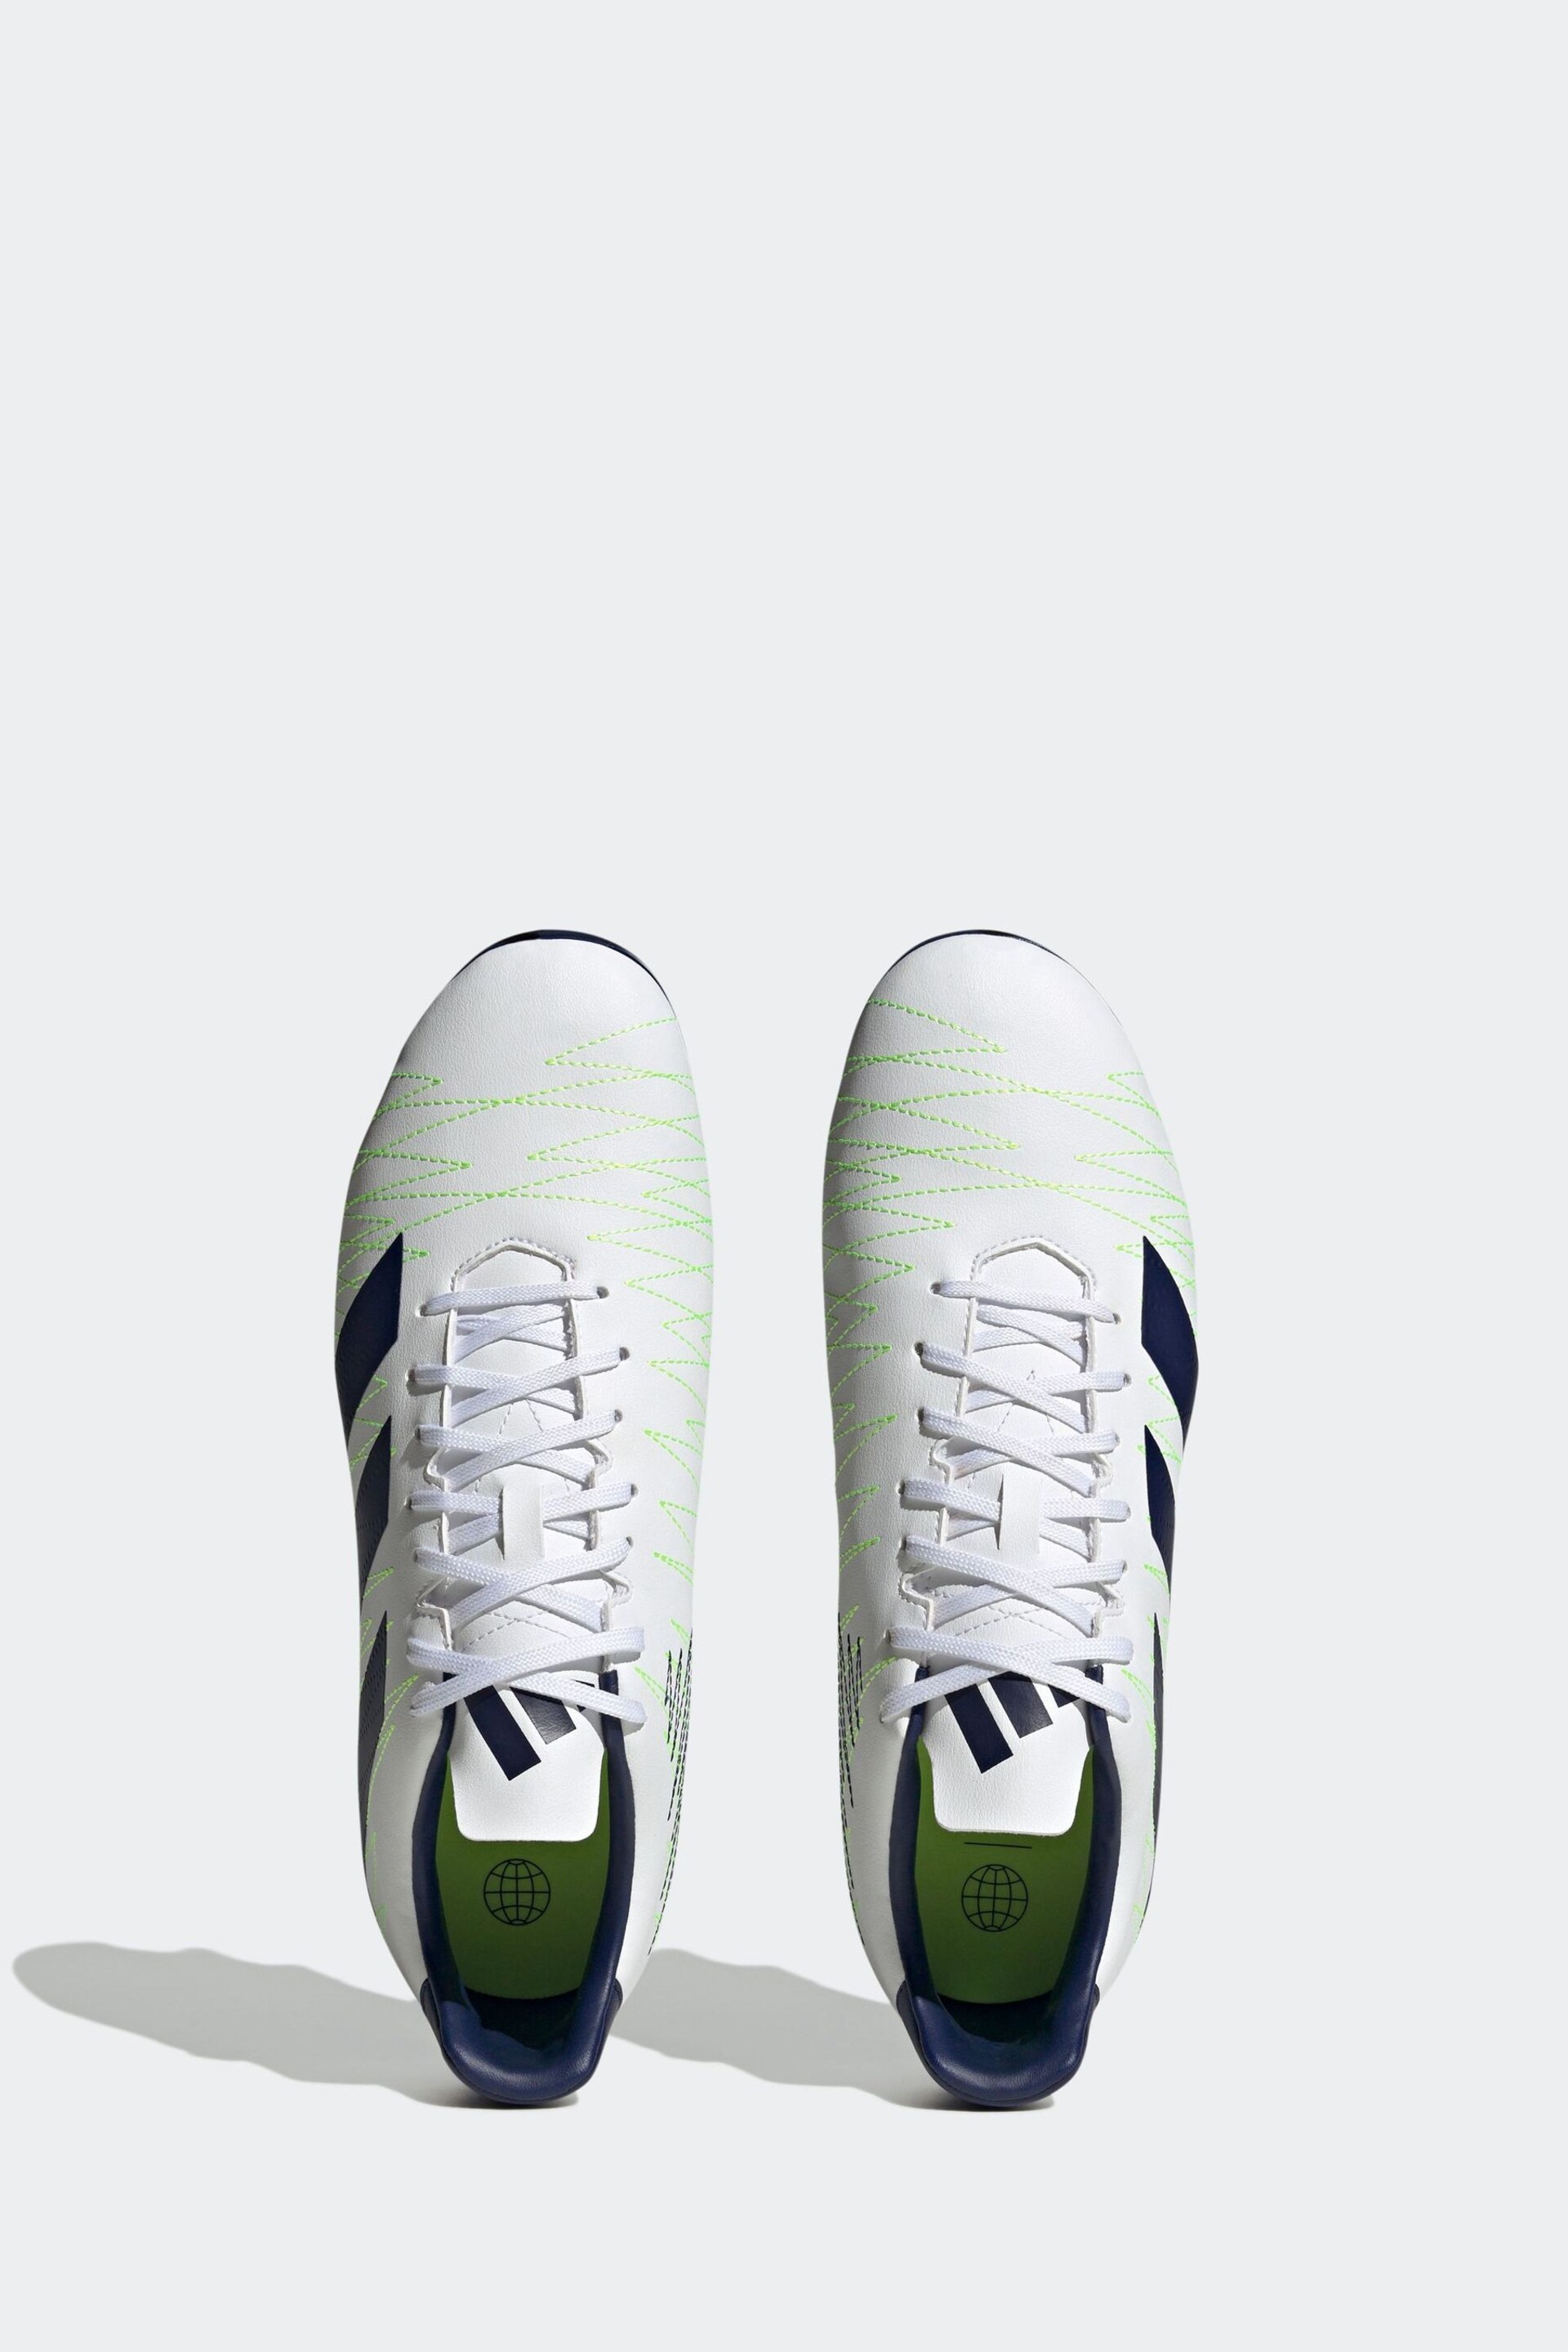 adidas White/Blue Performance Kakari SG Boots - Image 6 of 11